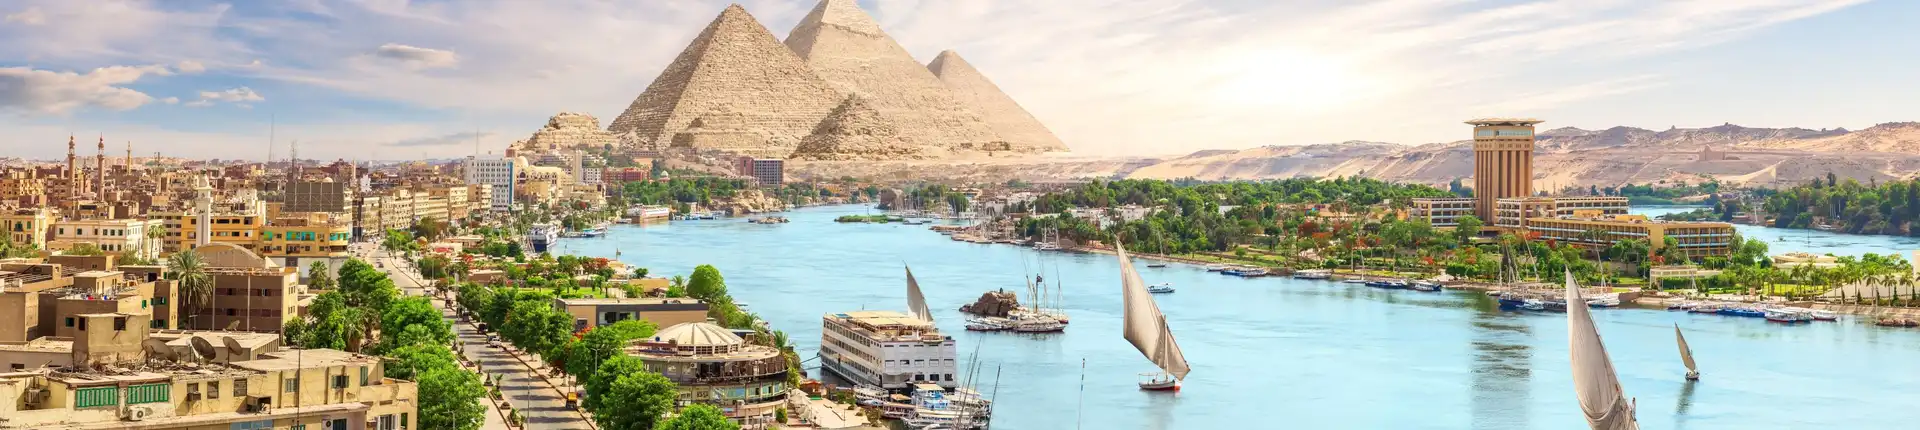 شروط السفر إلى مصر